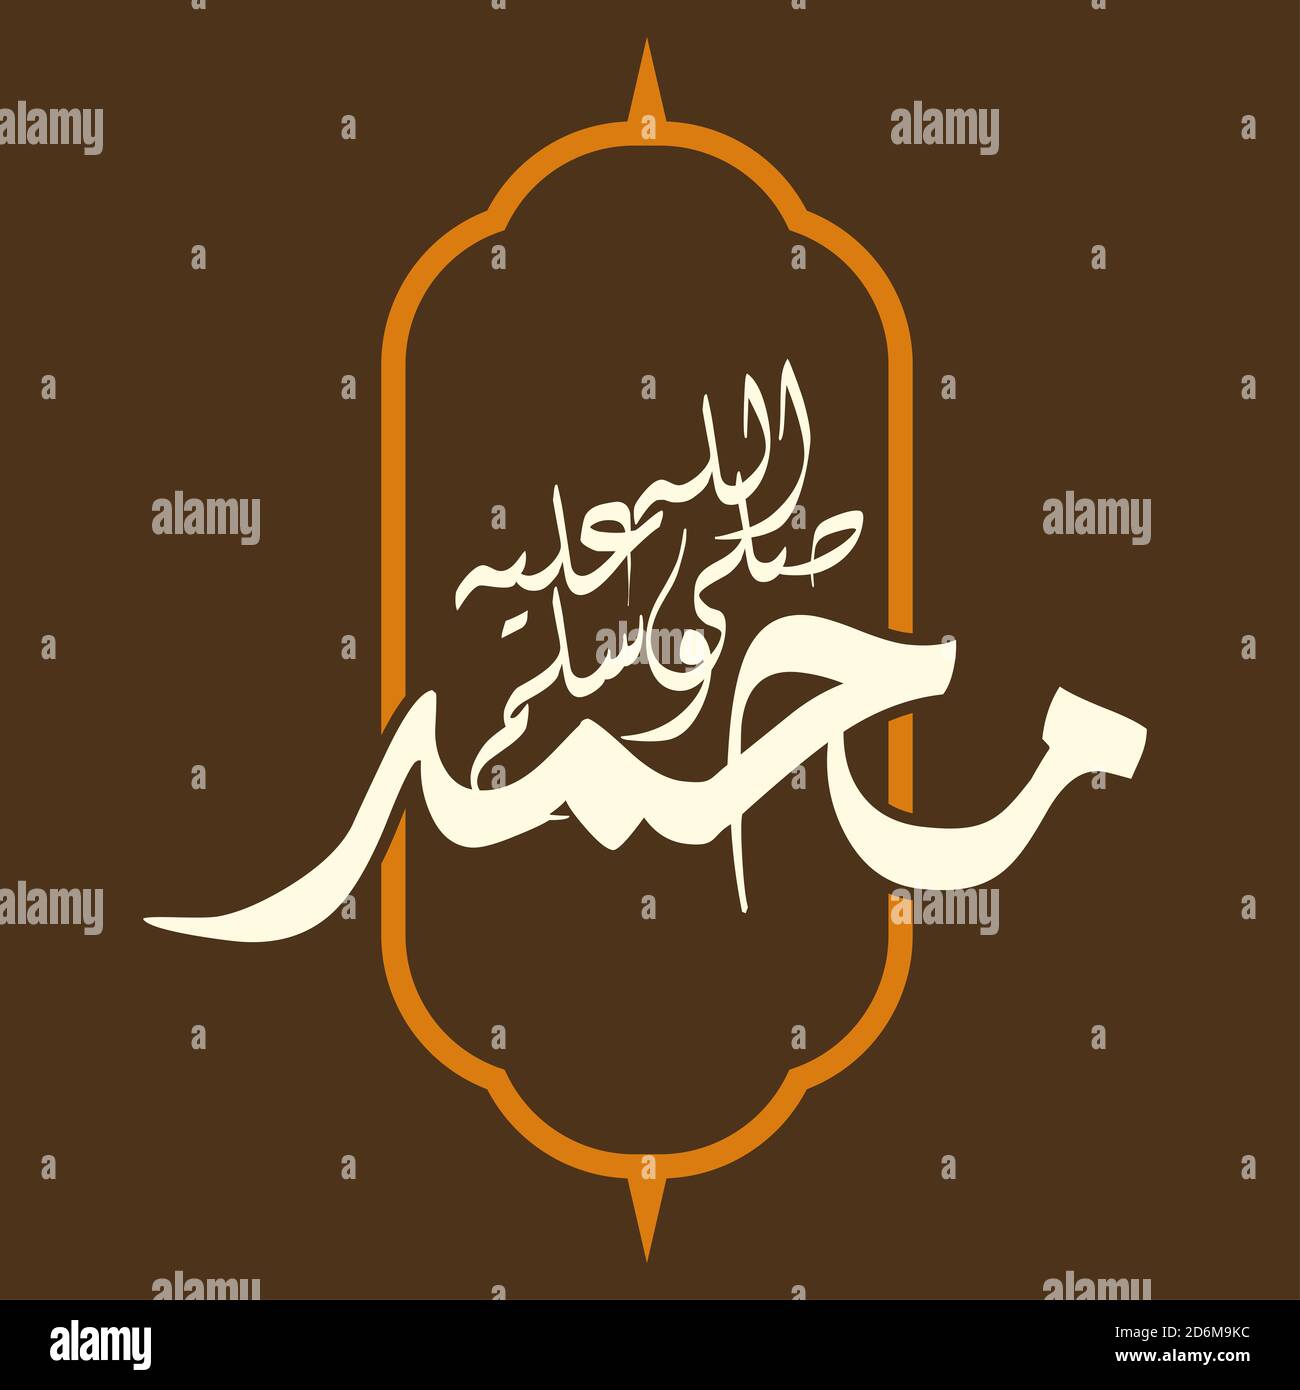 Prophet Muhammad Birthday islamic design with islamic motif pattern and calligraphy design vector Stock Photo